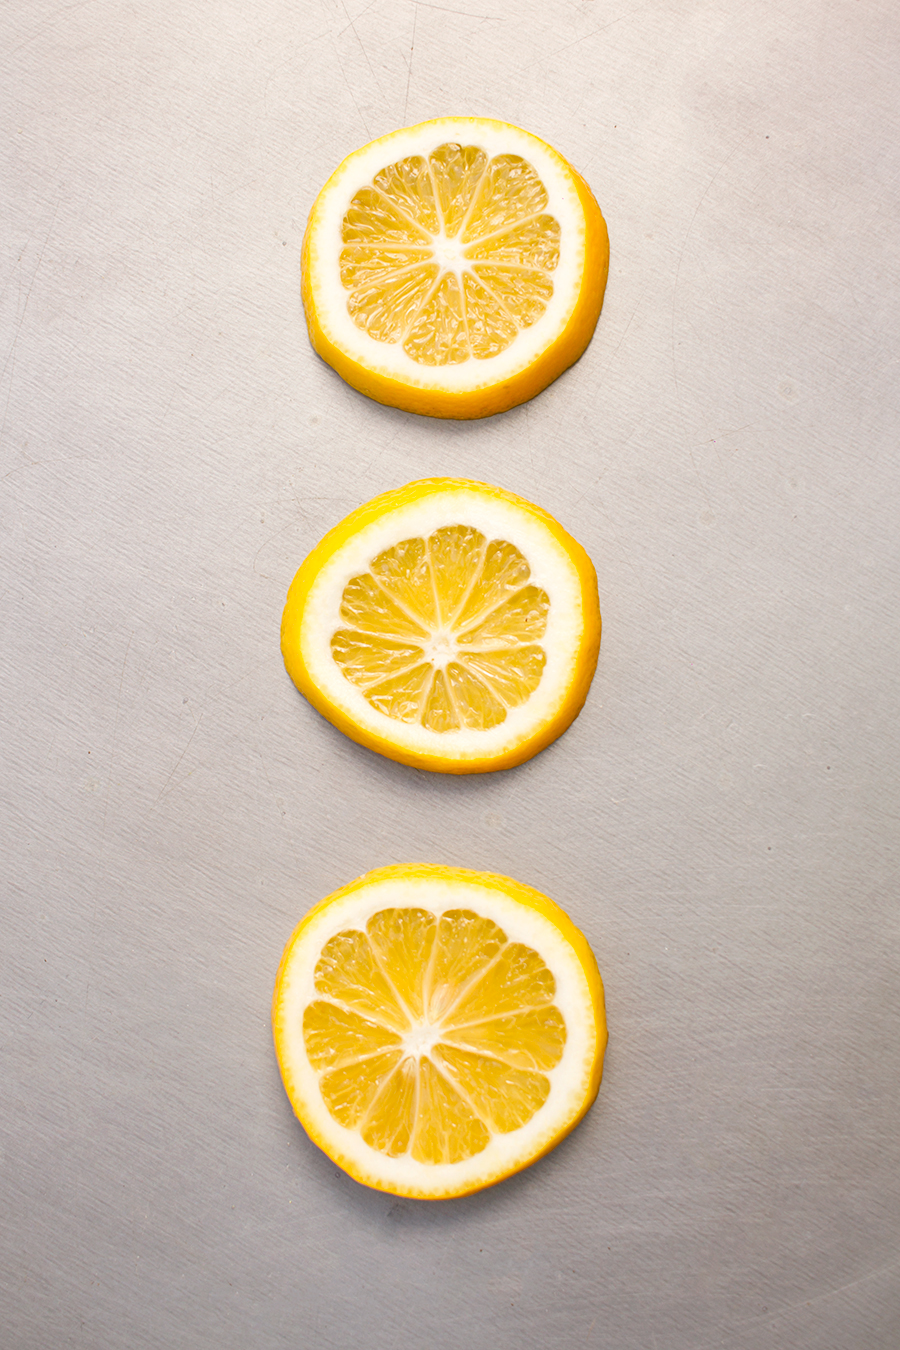 Meet The Lemons - Image Property of www.j-dphoto.com